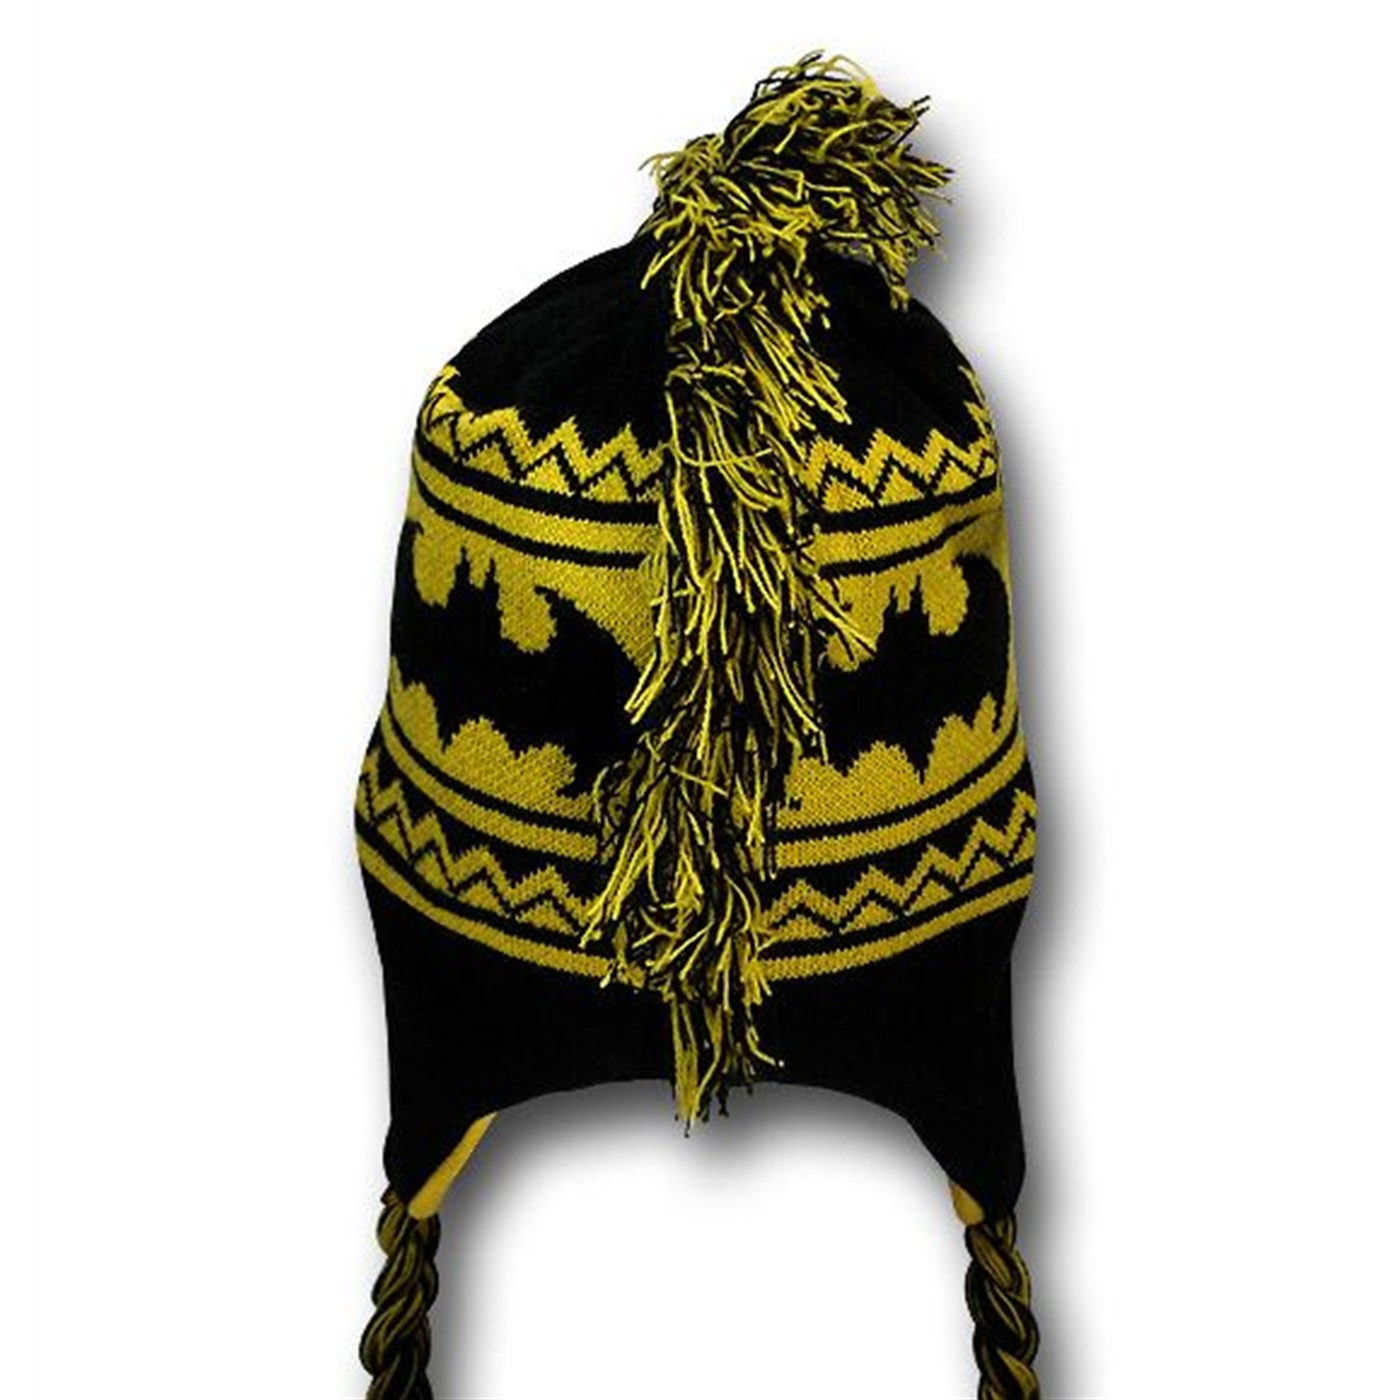 Batman Mohawk Peruvian Intarsia Hat